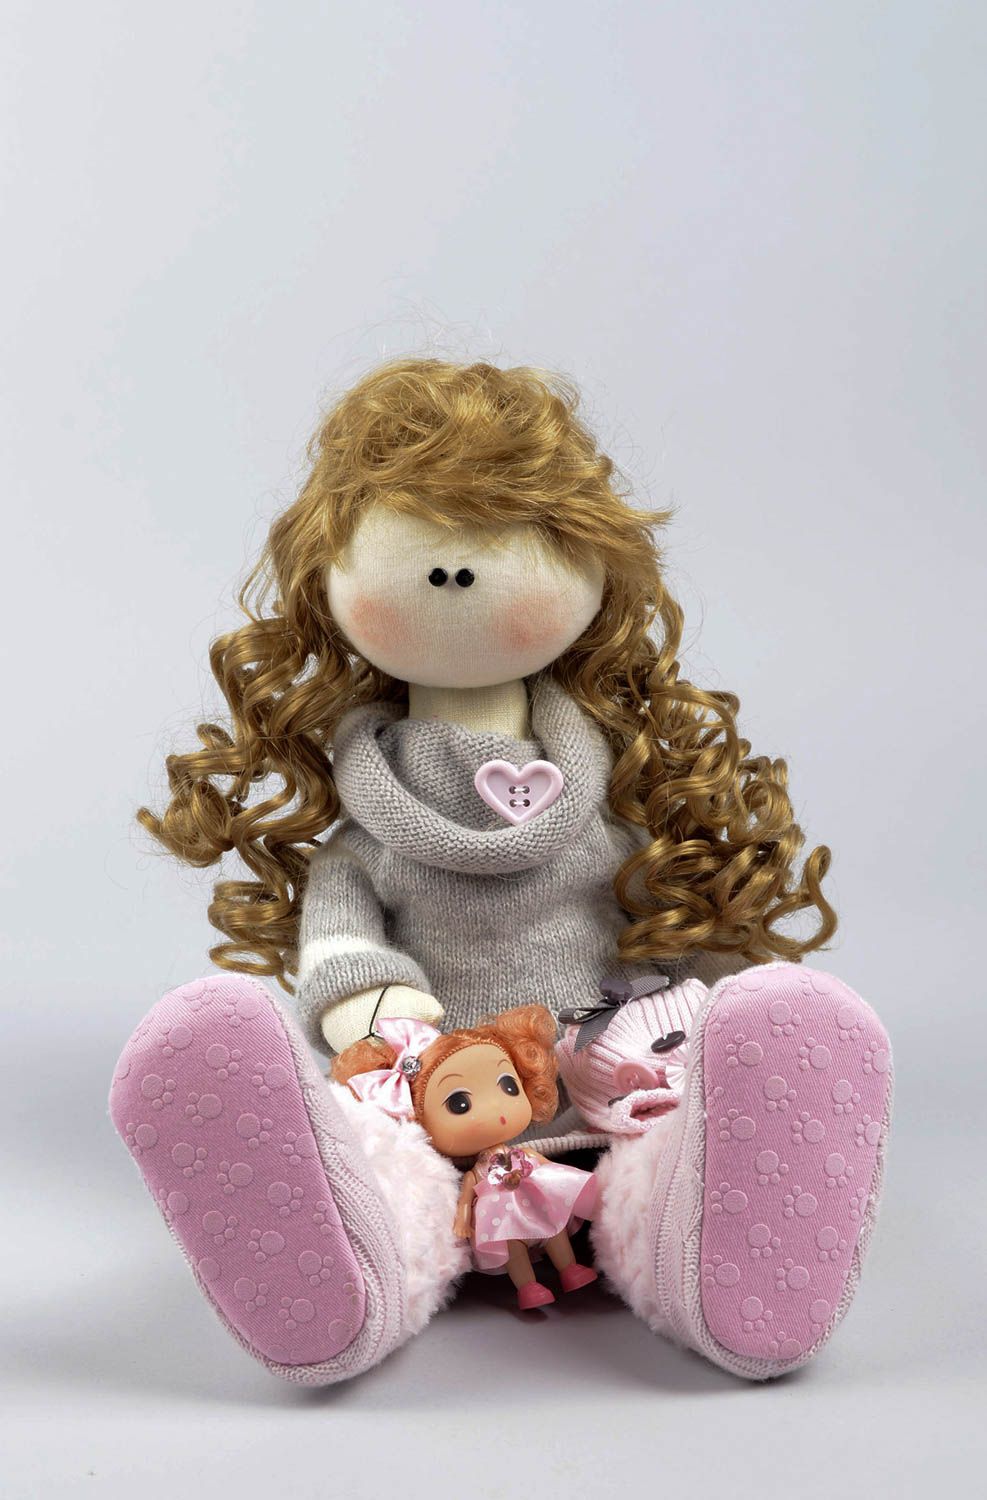 Unusual handmade soft toy for kids rag doll for girls birthday gift ideas photo 4